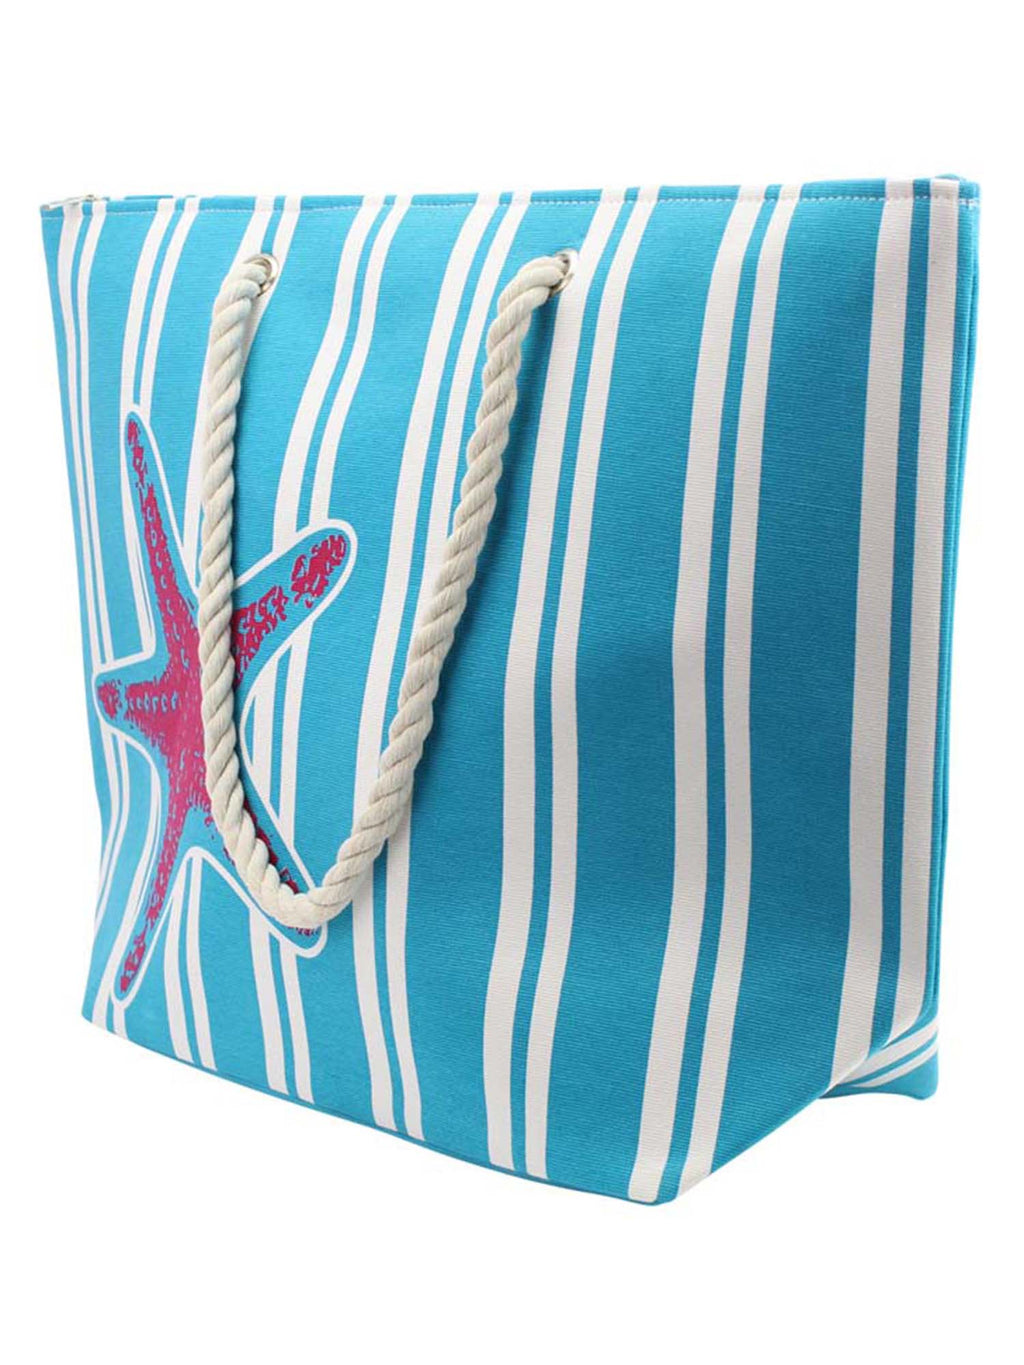 Turquoise Starfish & Stripes Canvas Beach Tote Bag